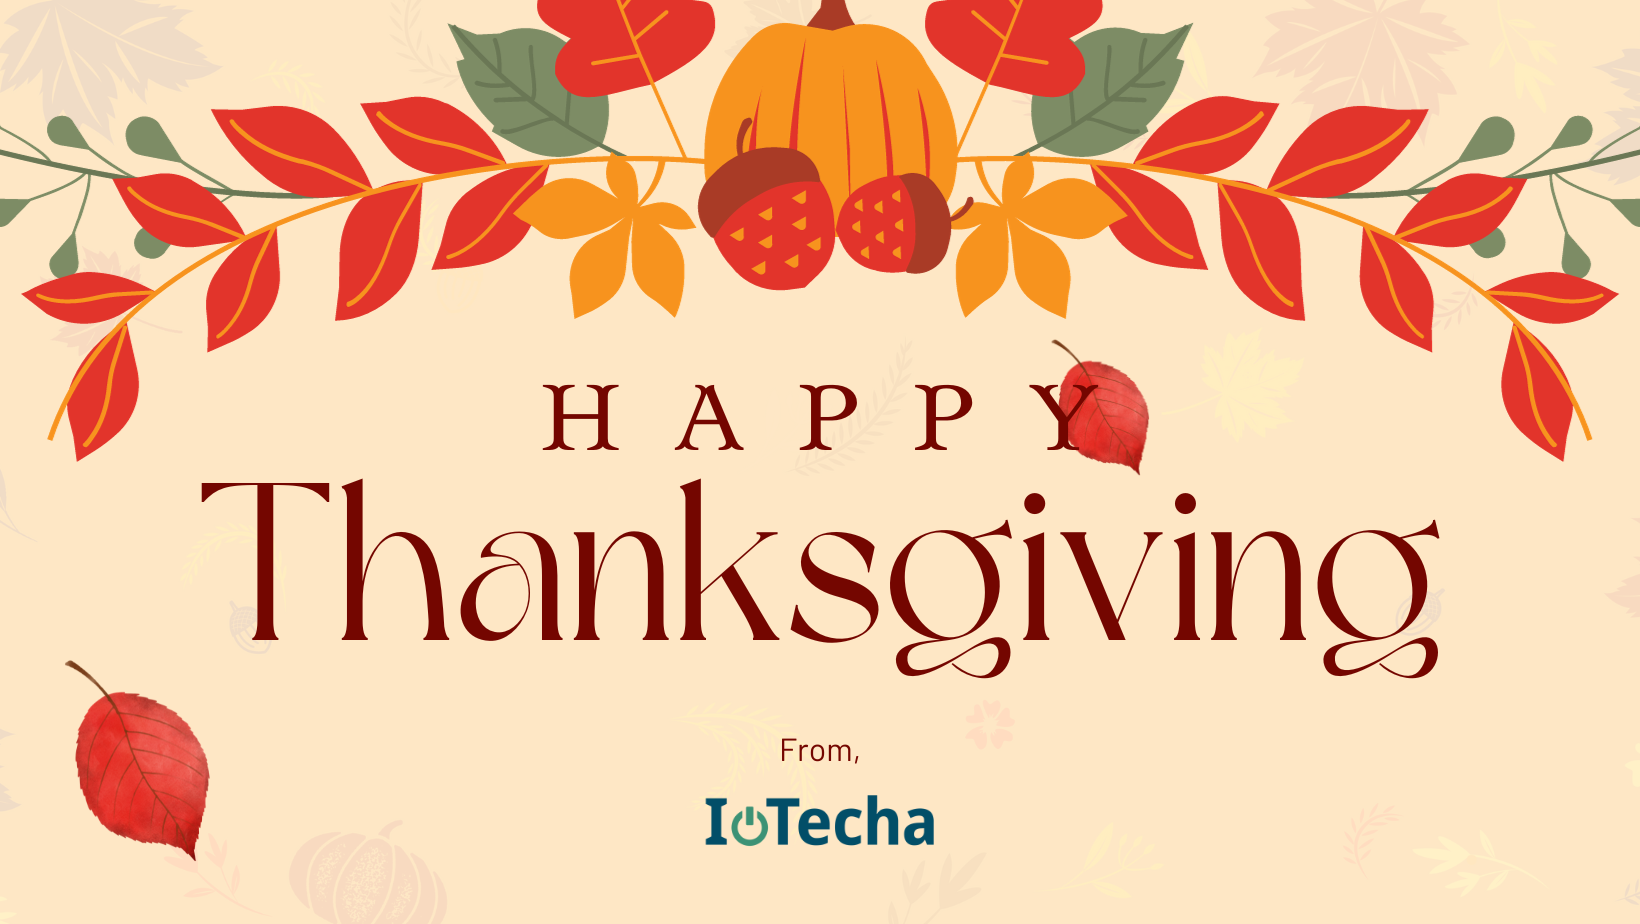 Happy Thanksgiving from IoTecha!